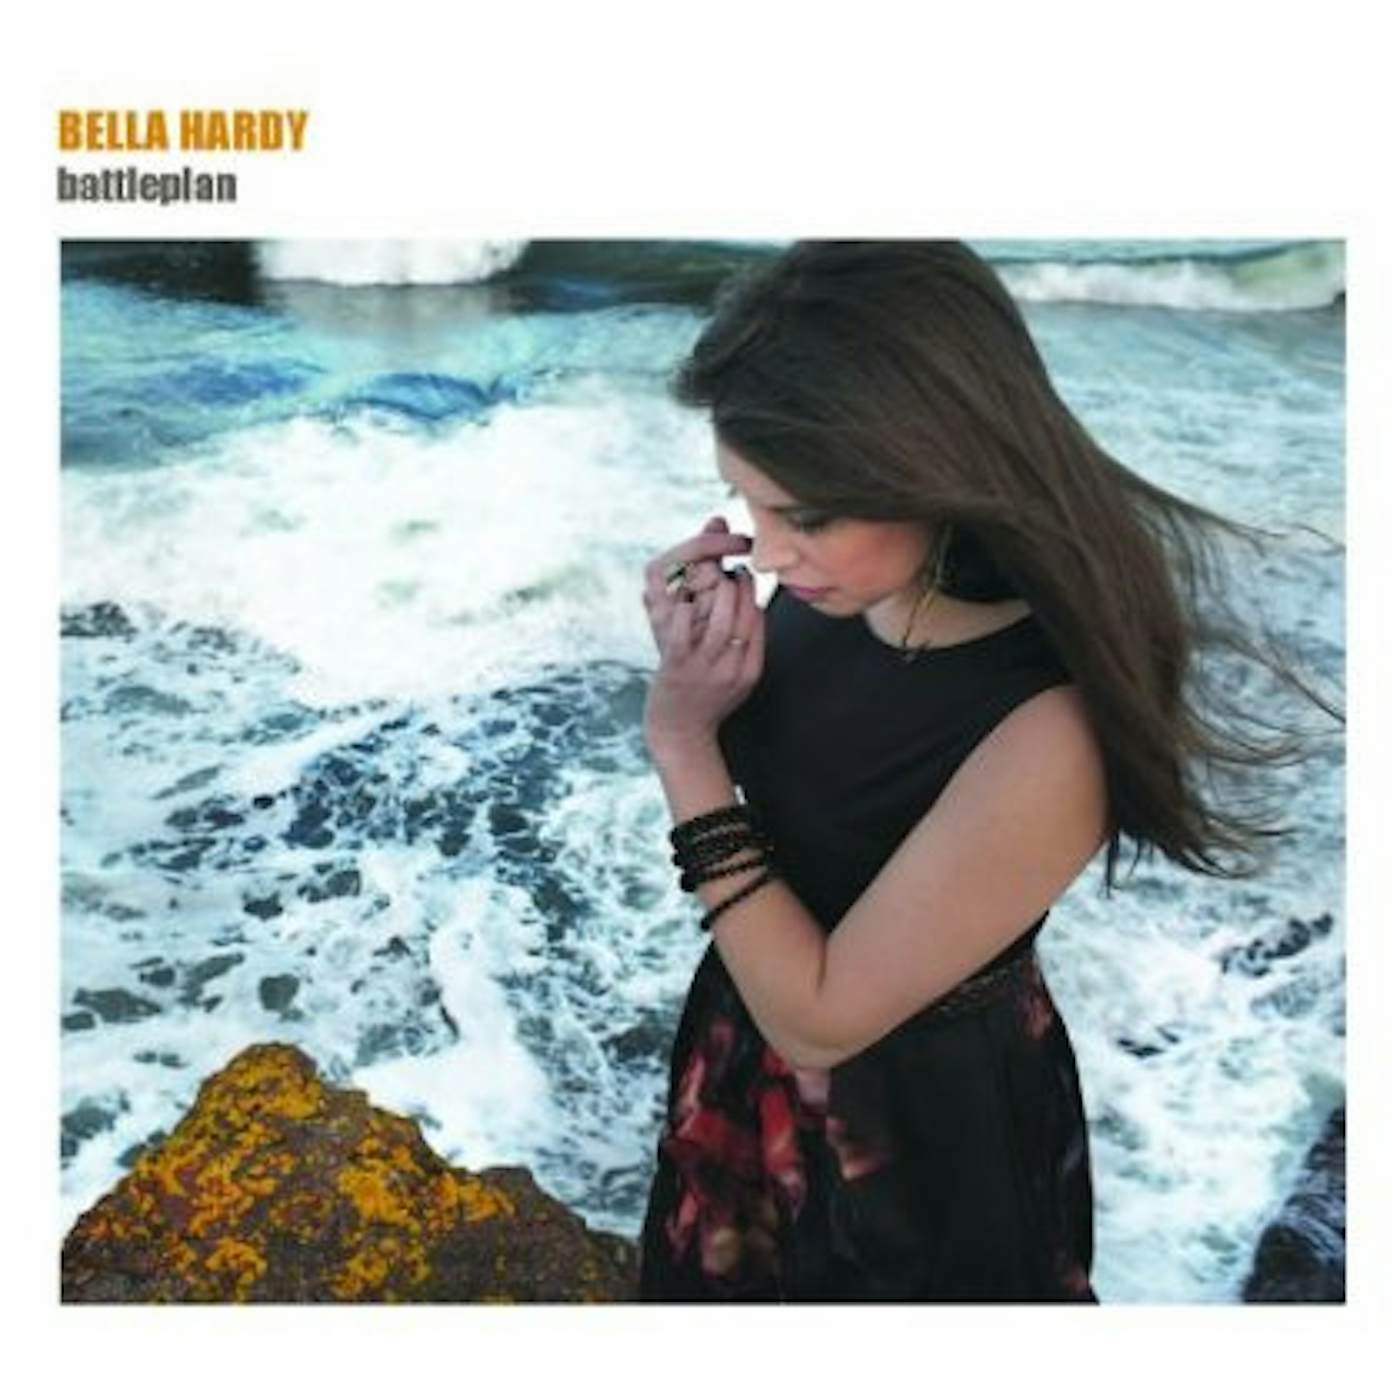 Bella Hardy BATTLEPLAN CD